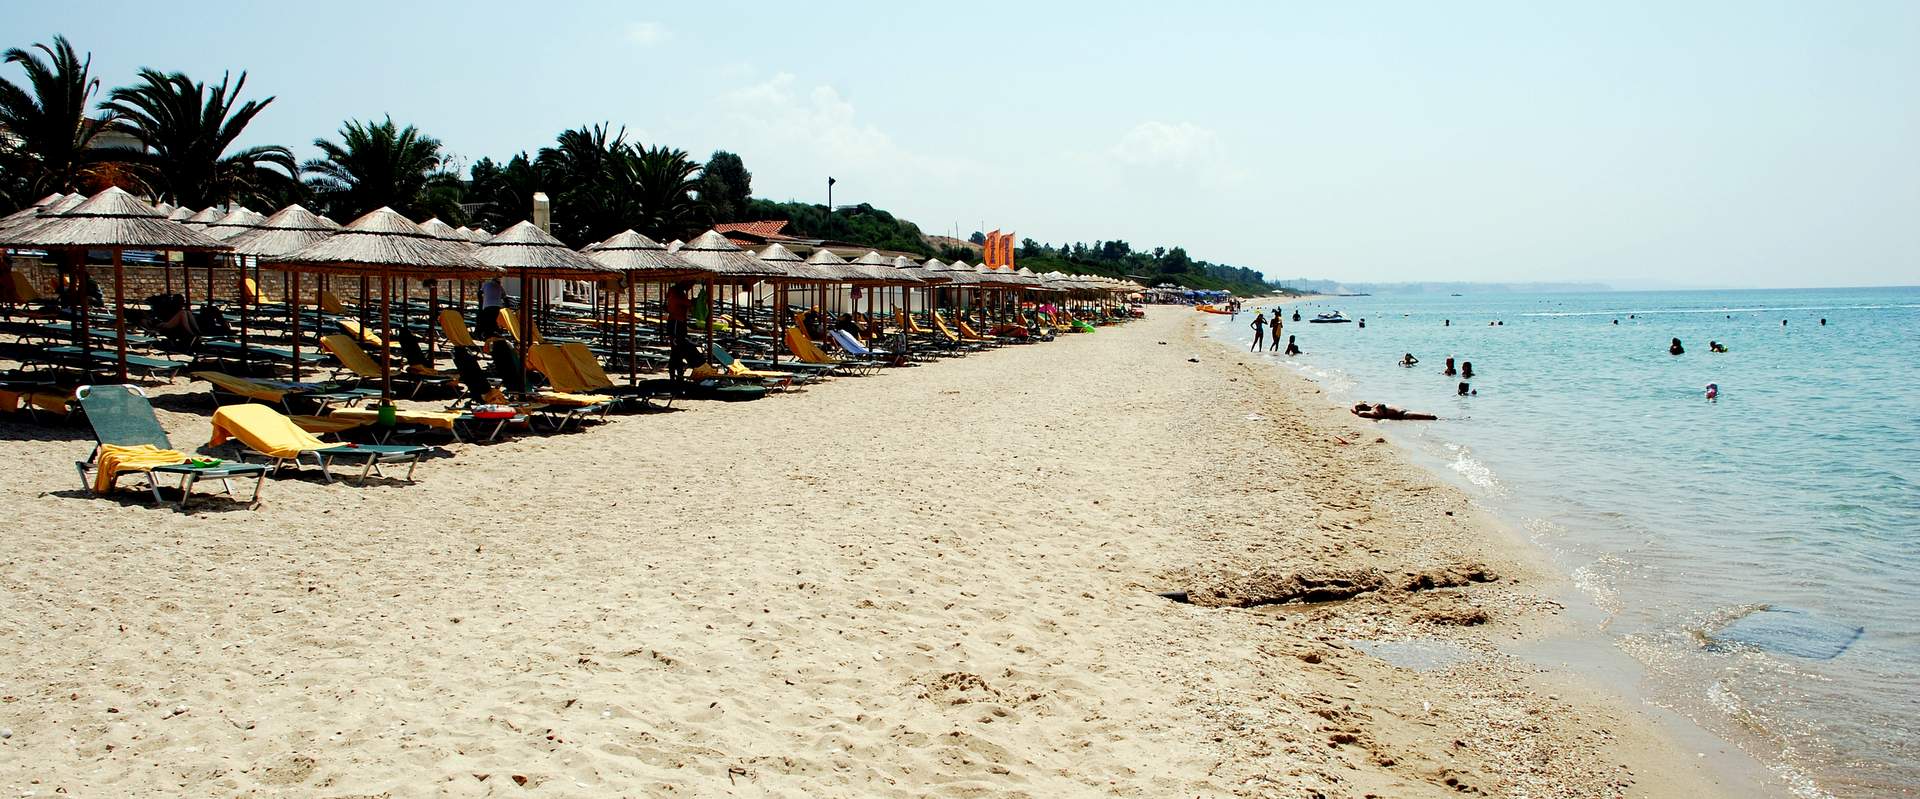 Portes beach, Halkidiki, Greece